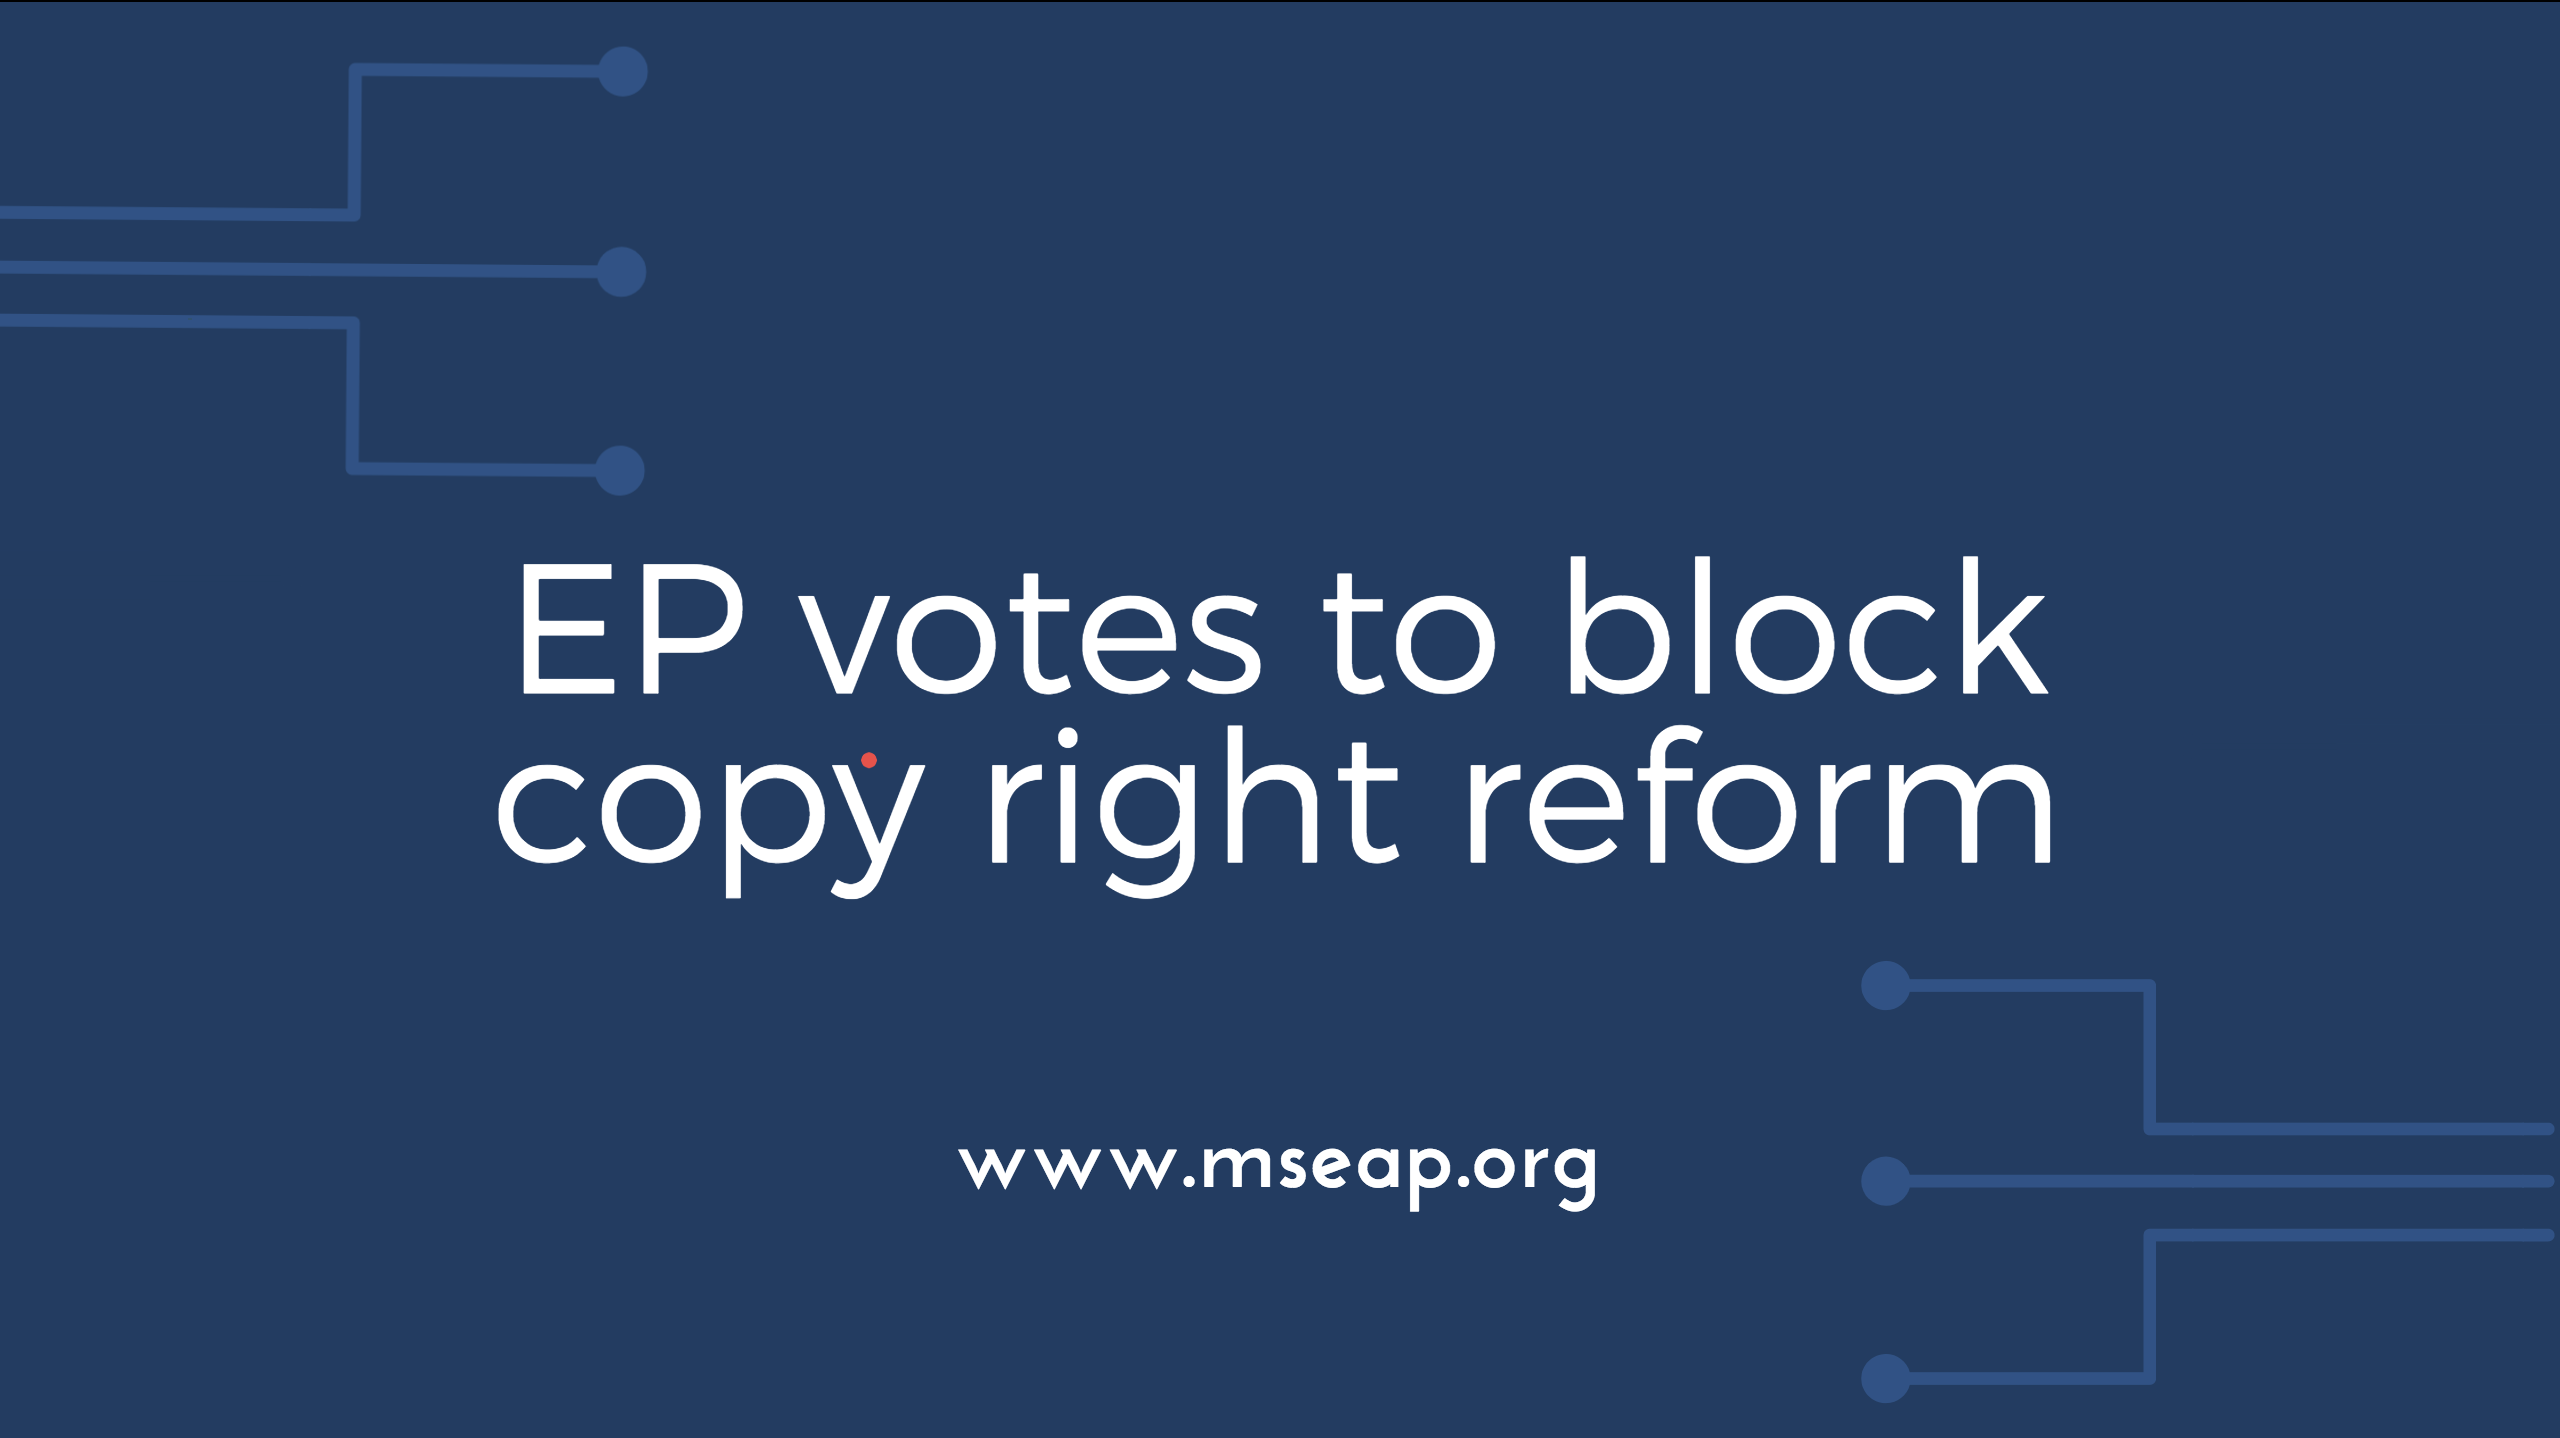 European Parliament votes to block copyright reform